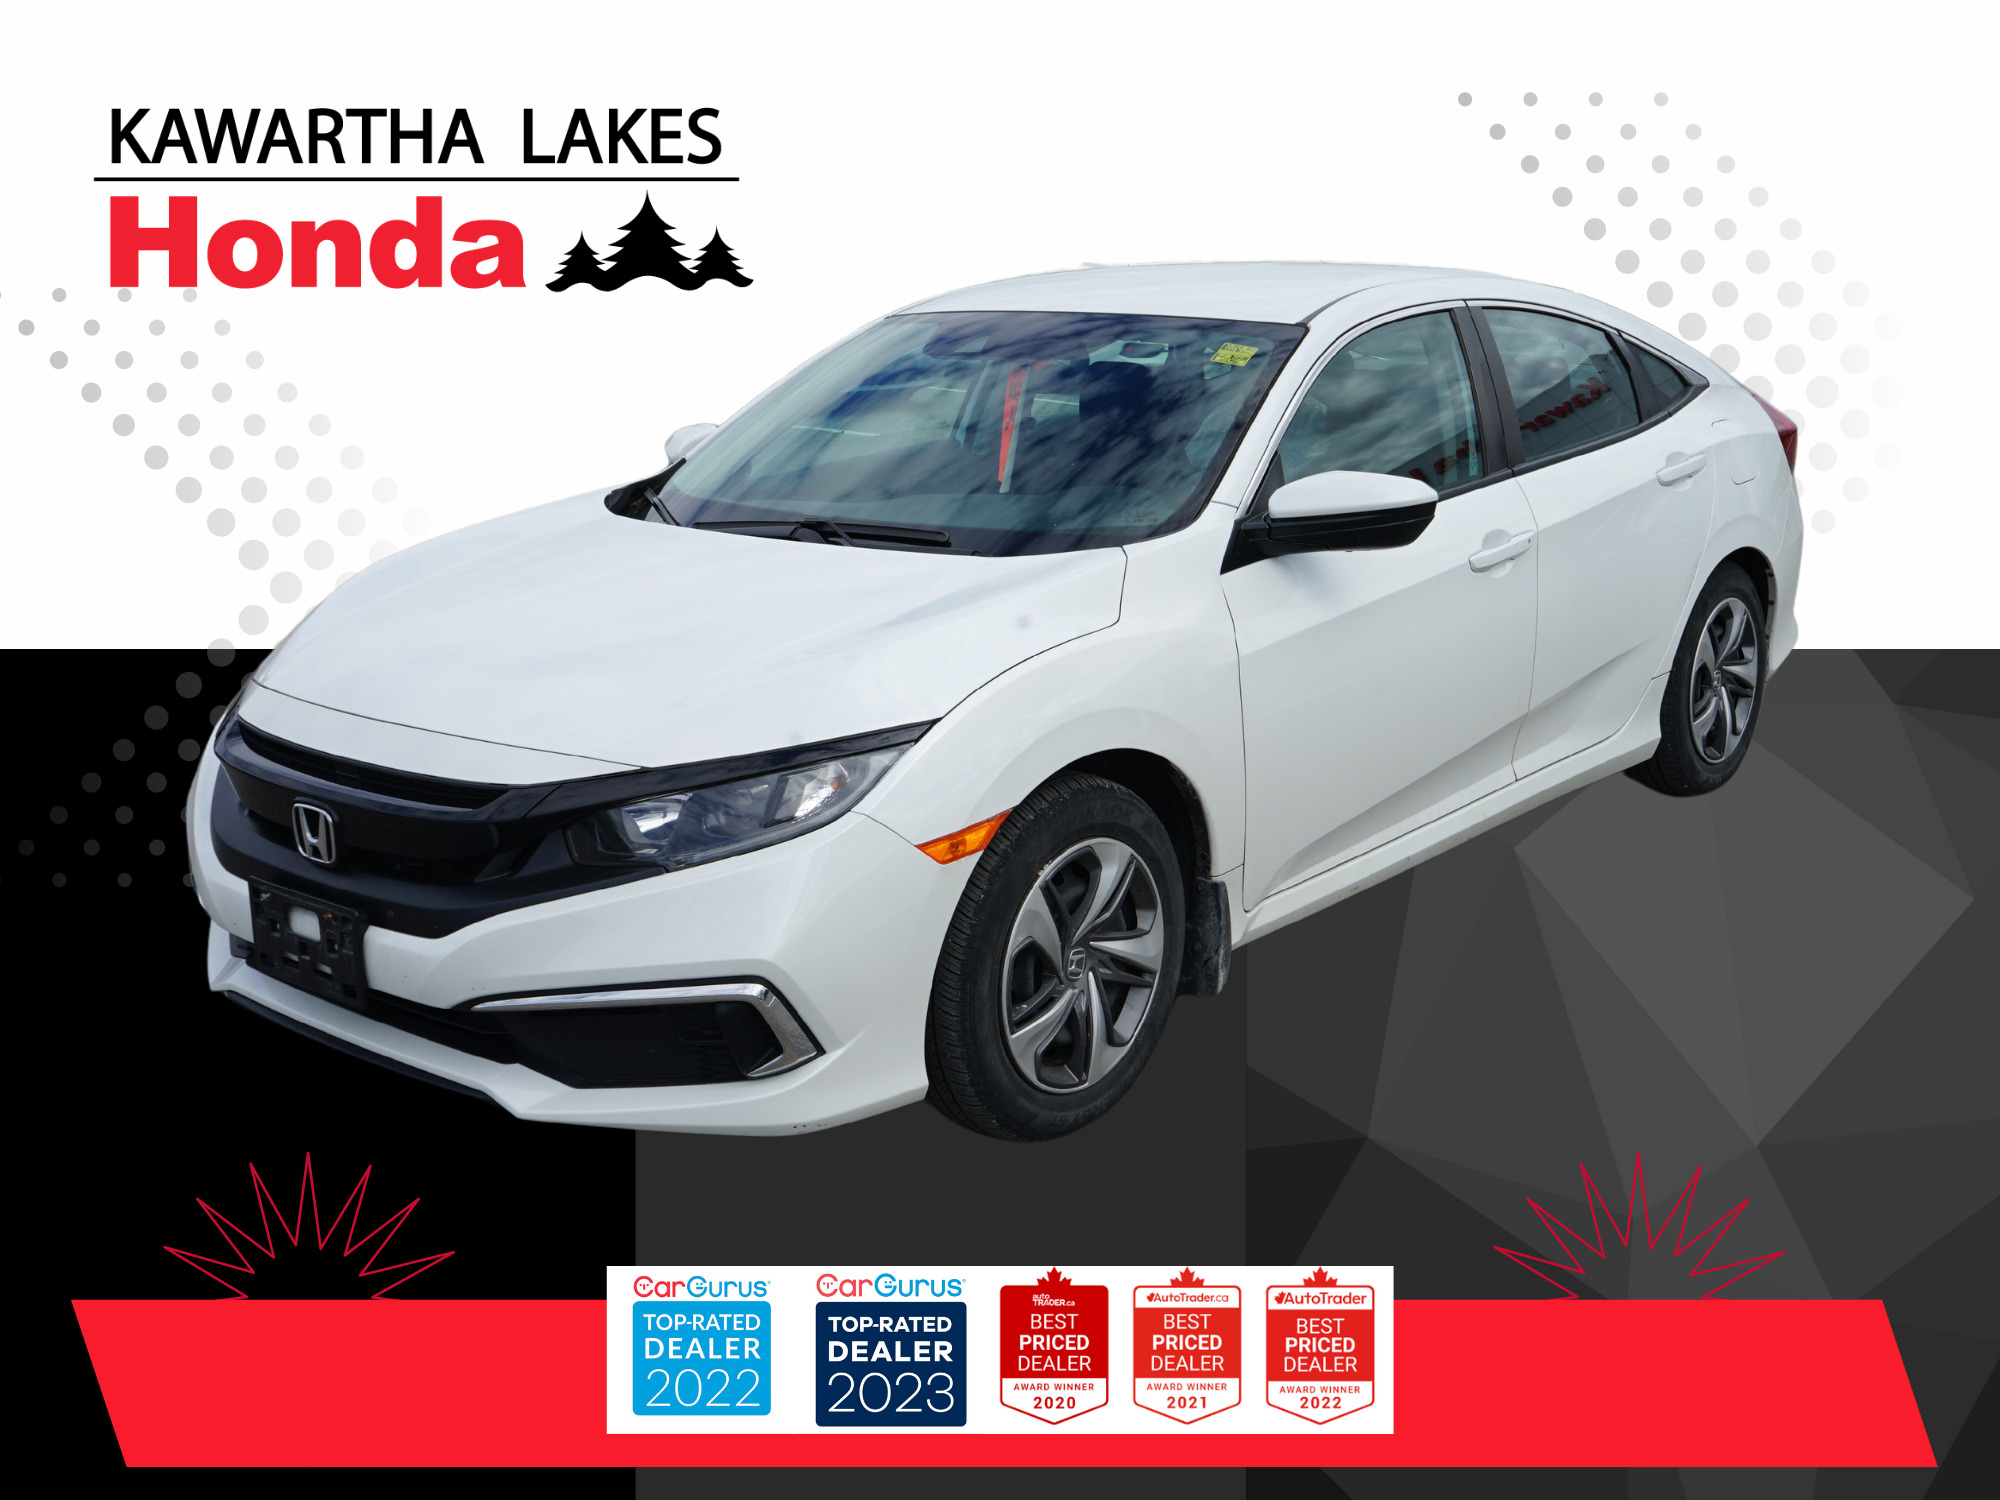 2020 Honda Civic Sedan LX Manual/ INCLUDES A WINTER TIRE PACKAGE!!!!